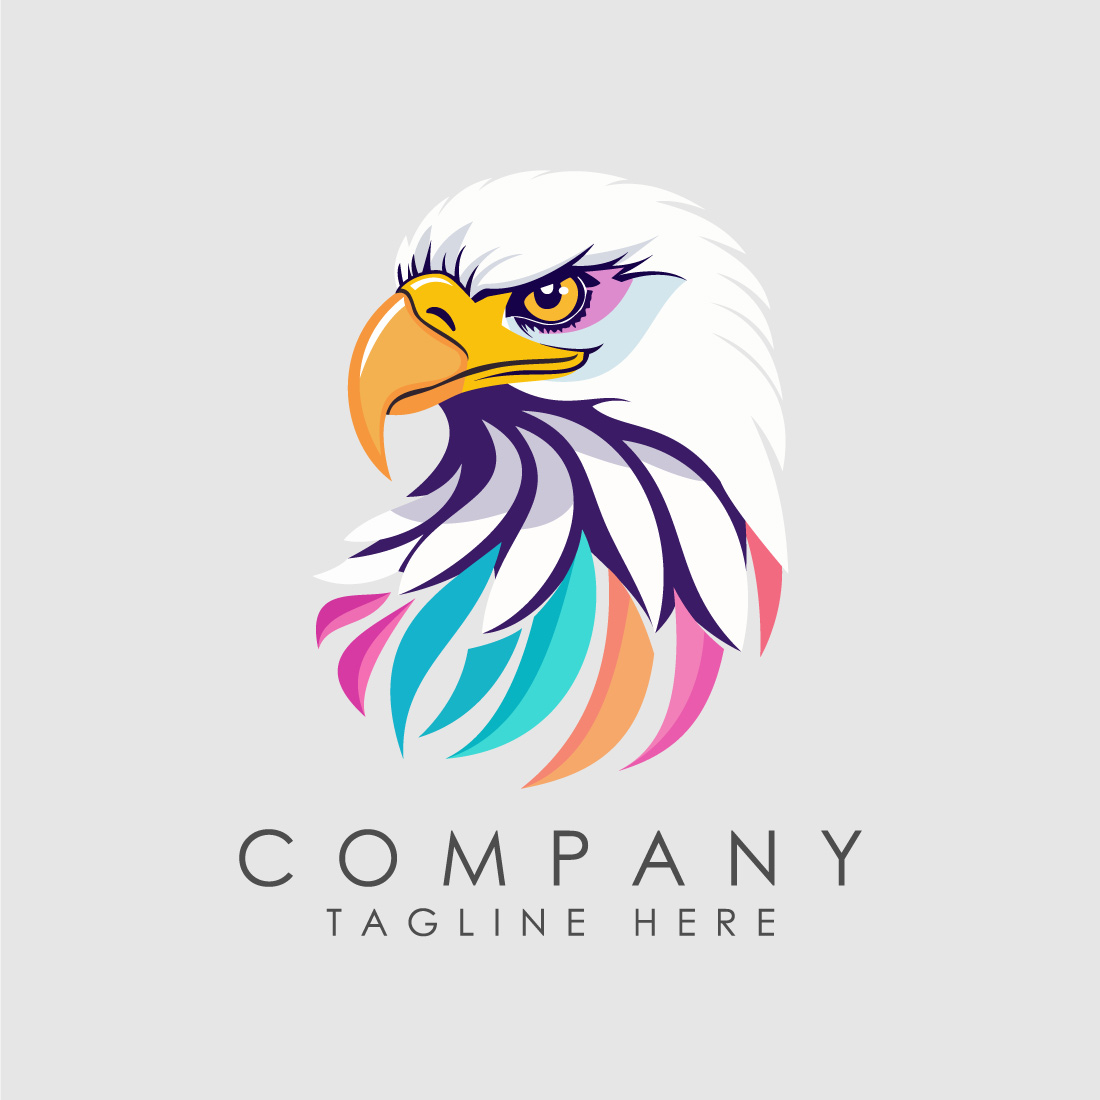 Eagle head logo vector illustration Mascot head of an Eagle preview image.